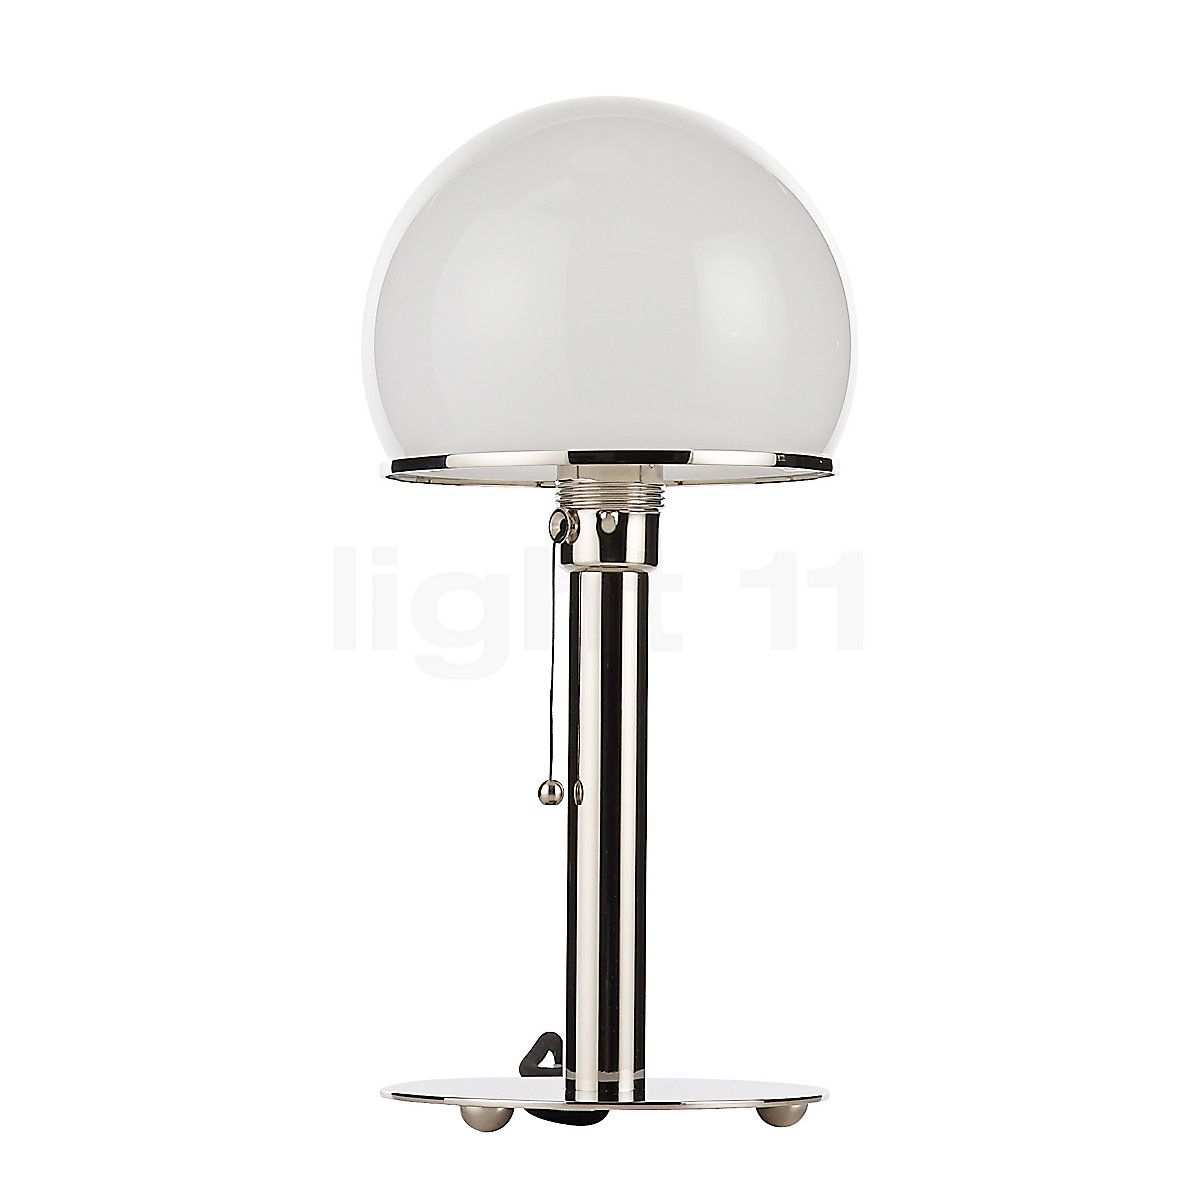 Tecnolumen Wagenfeld Wa 24 Table Lamp, Wilhelm Wagenfeld Table Lamp Wg 24